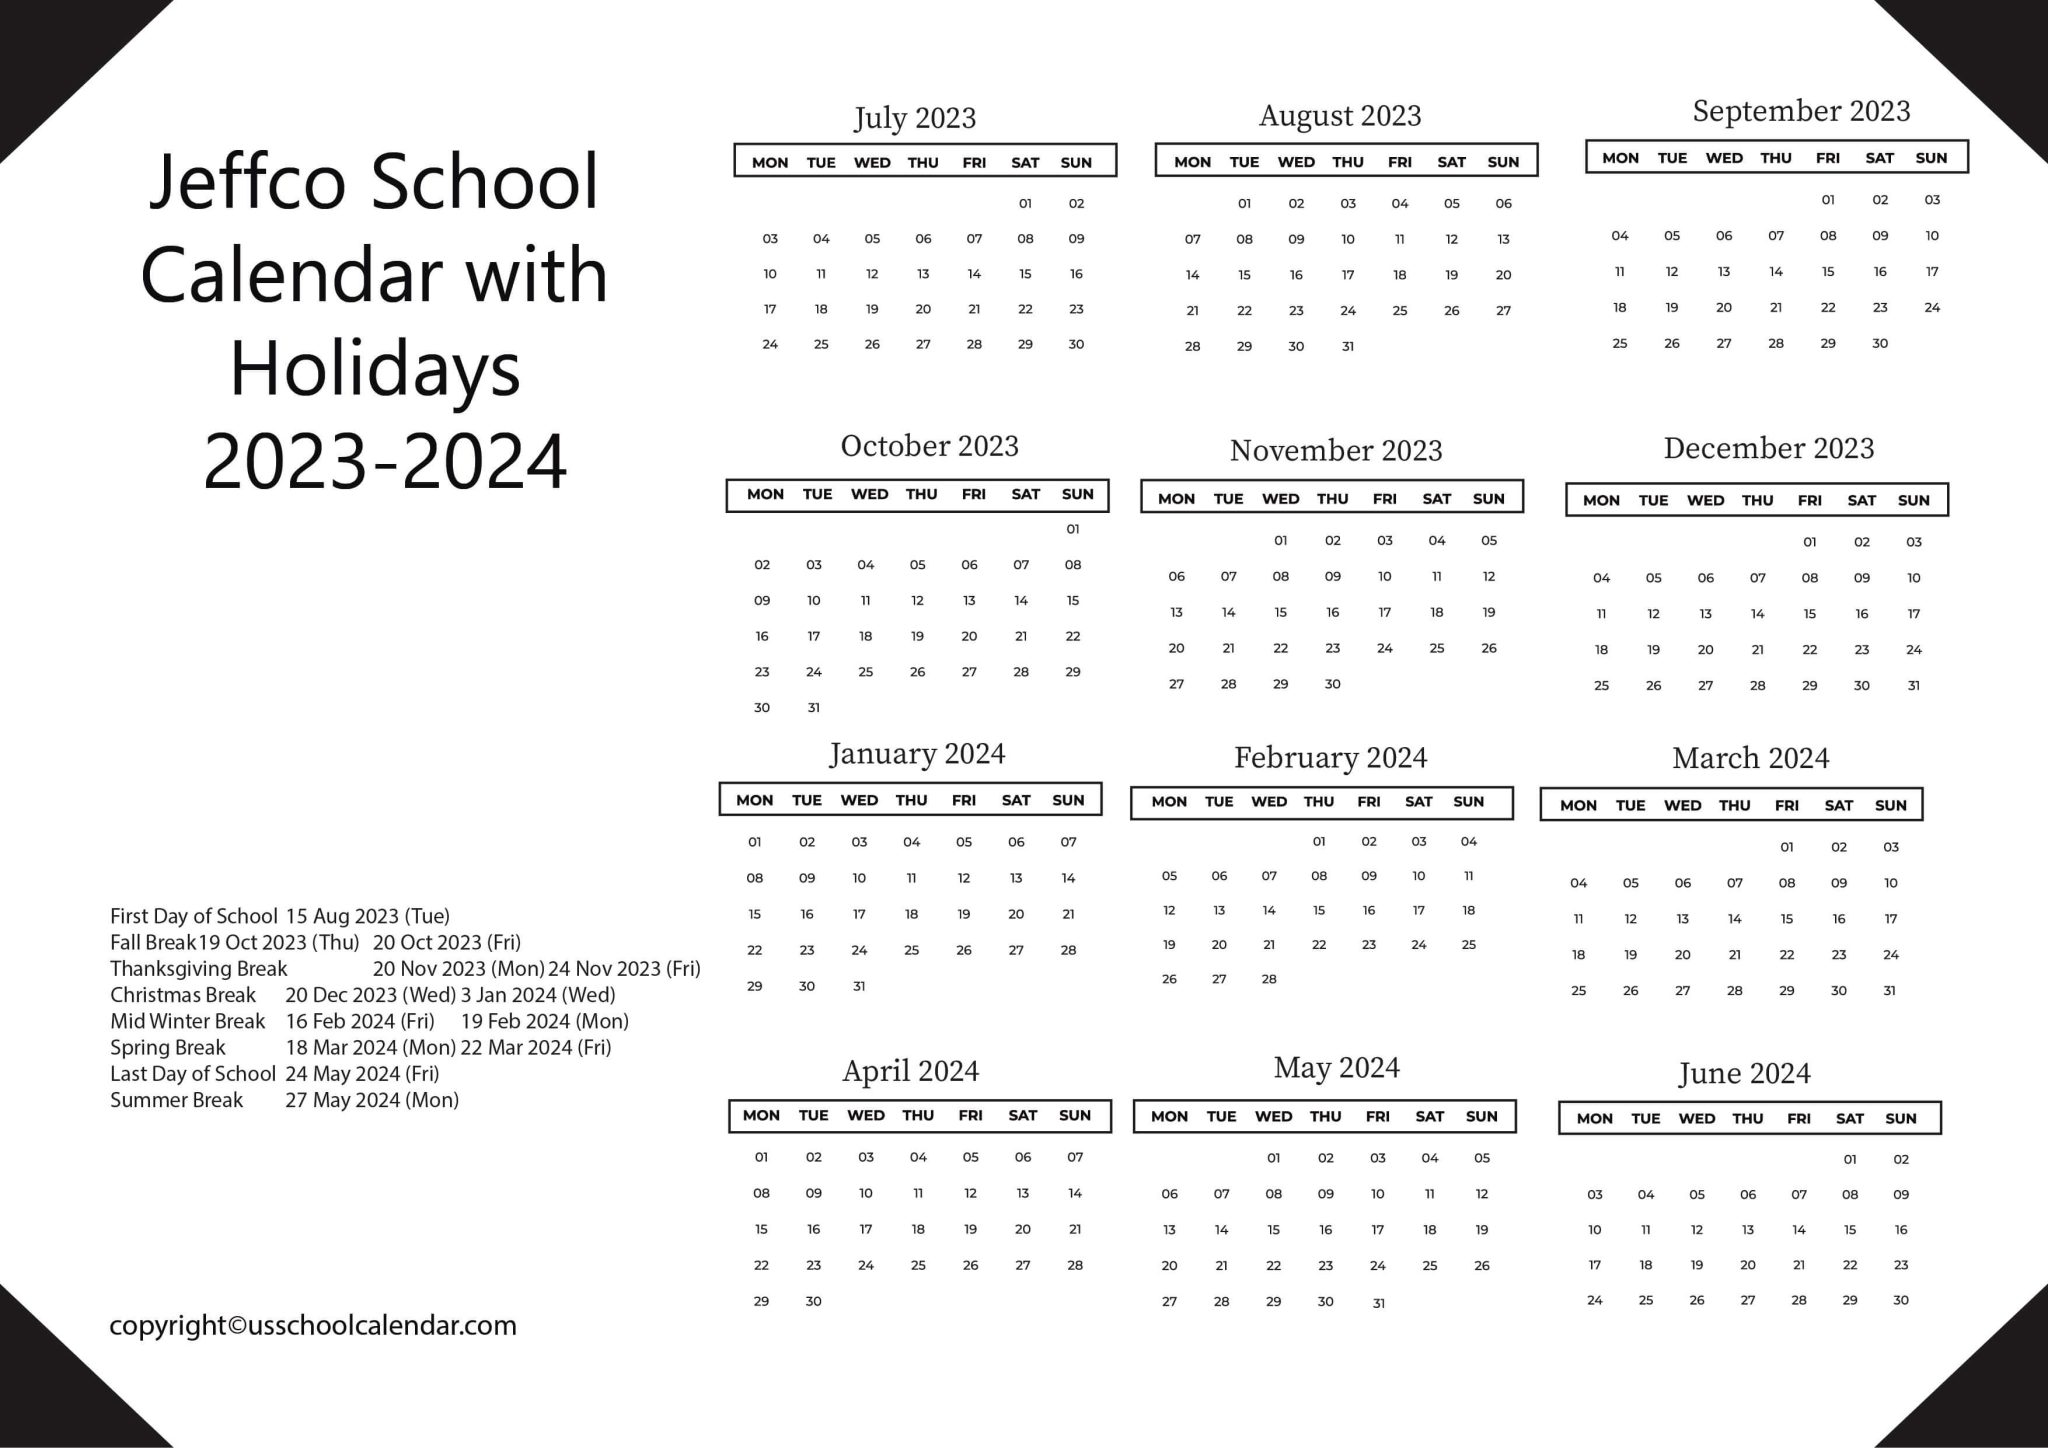 jeffco-school-calendar-with-holidays-2023-2024